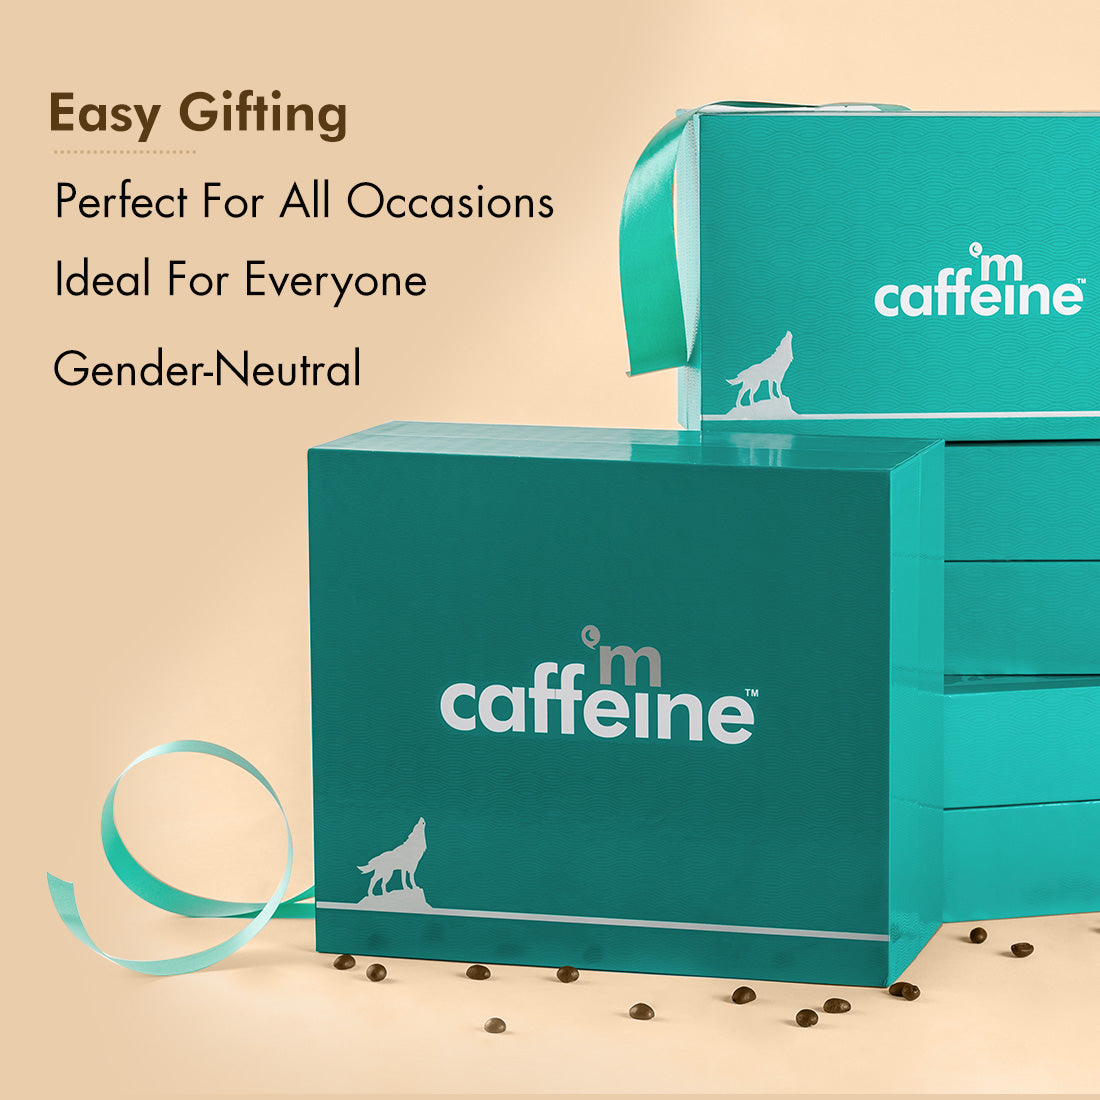 mCaffeine Coffee Quick Glow-up Body Gift Kit